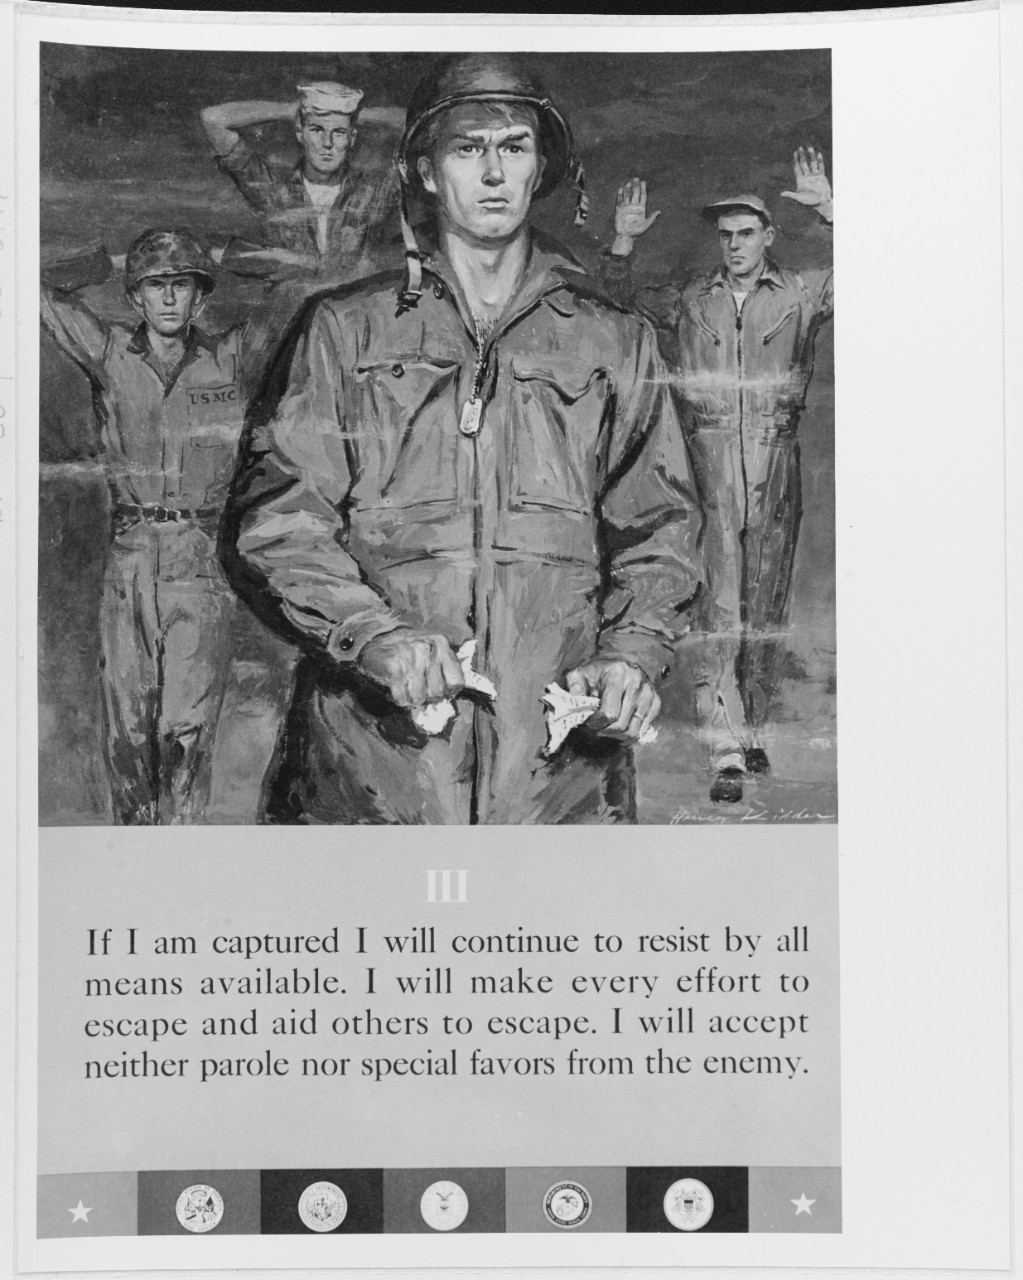 Prisoner of War Code of Conduct Poster #3